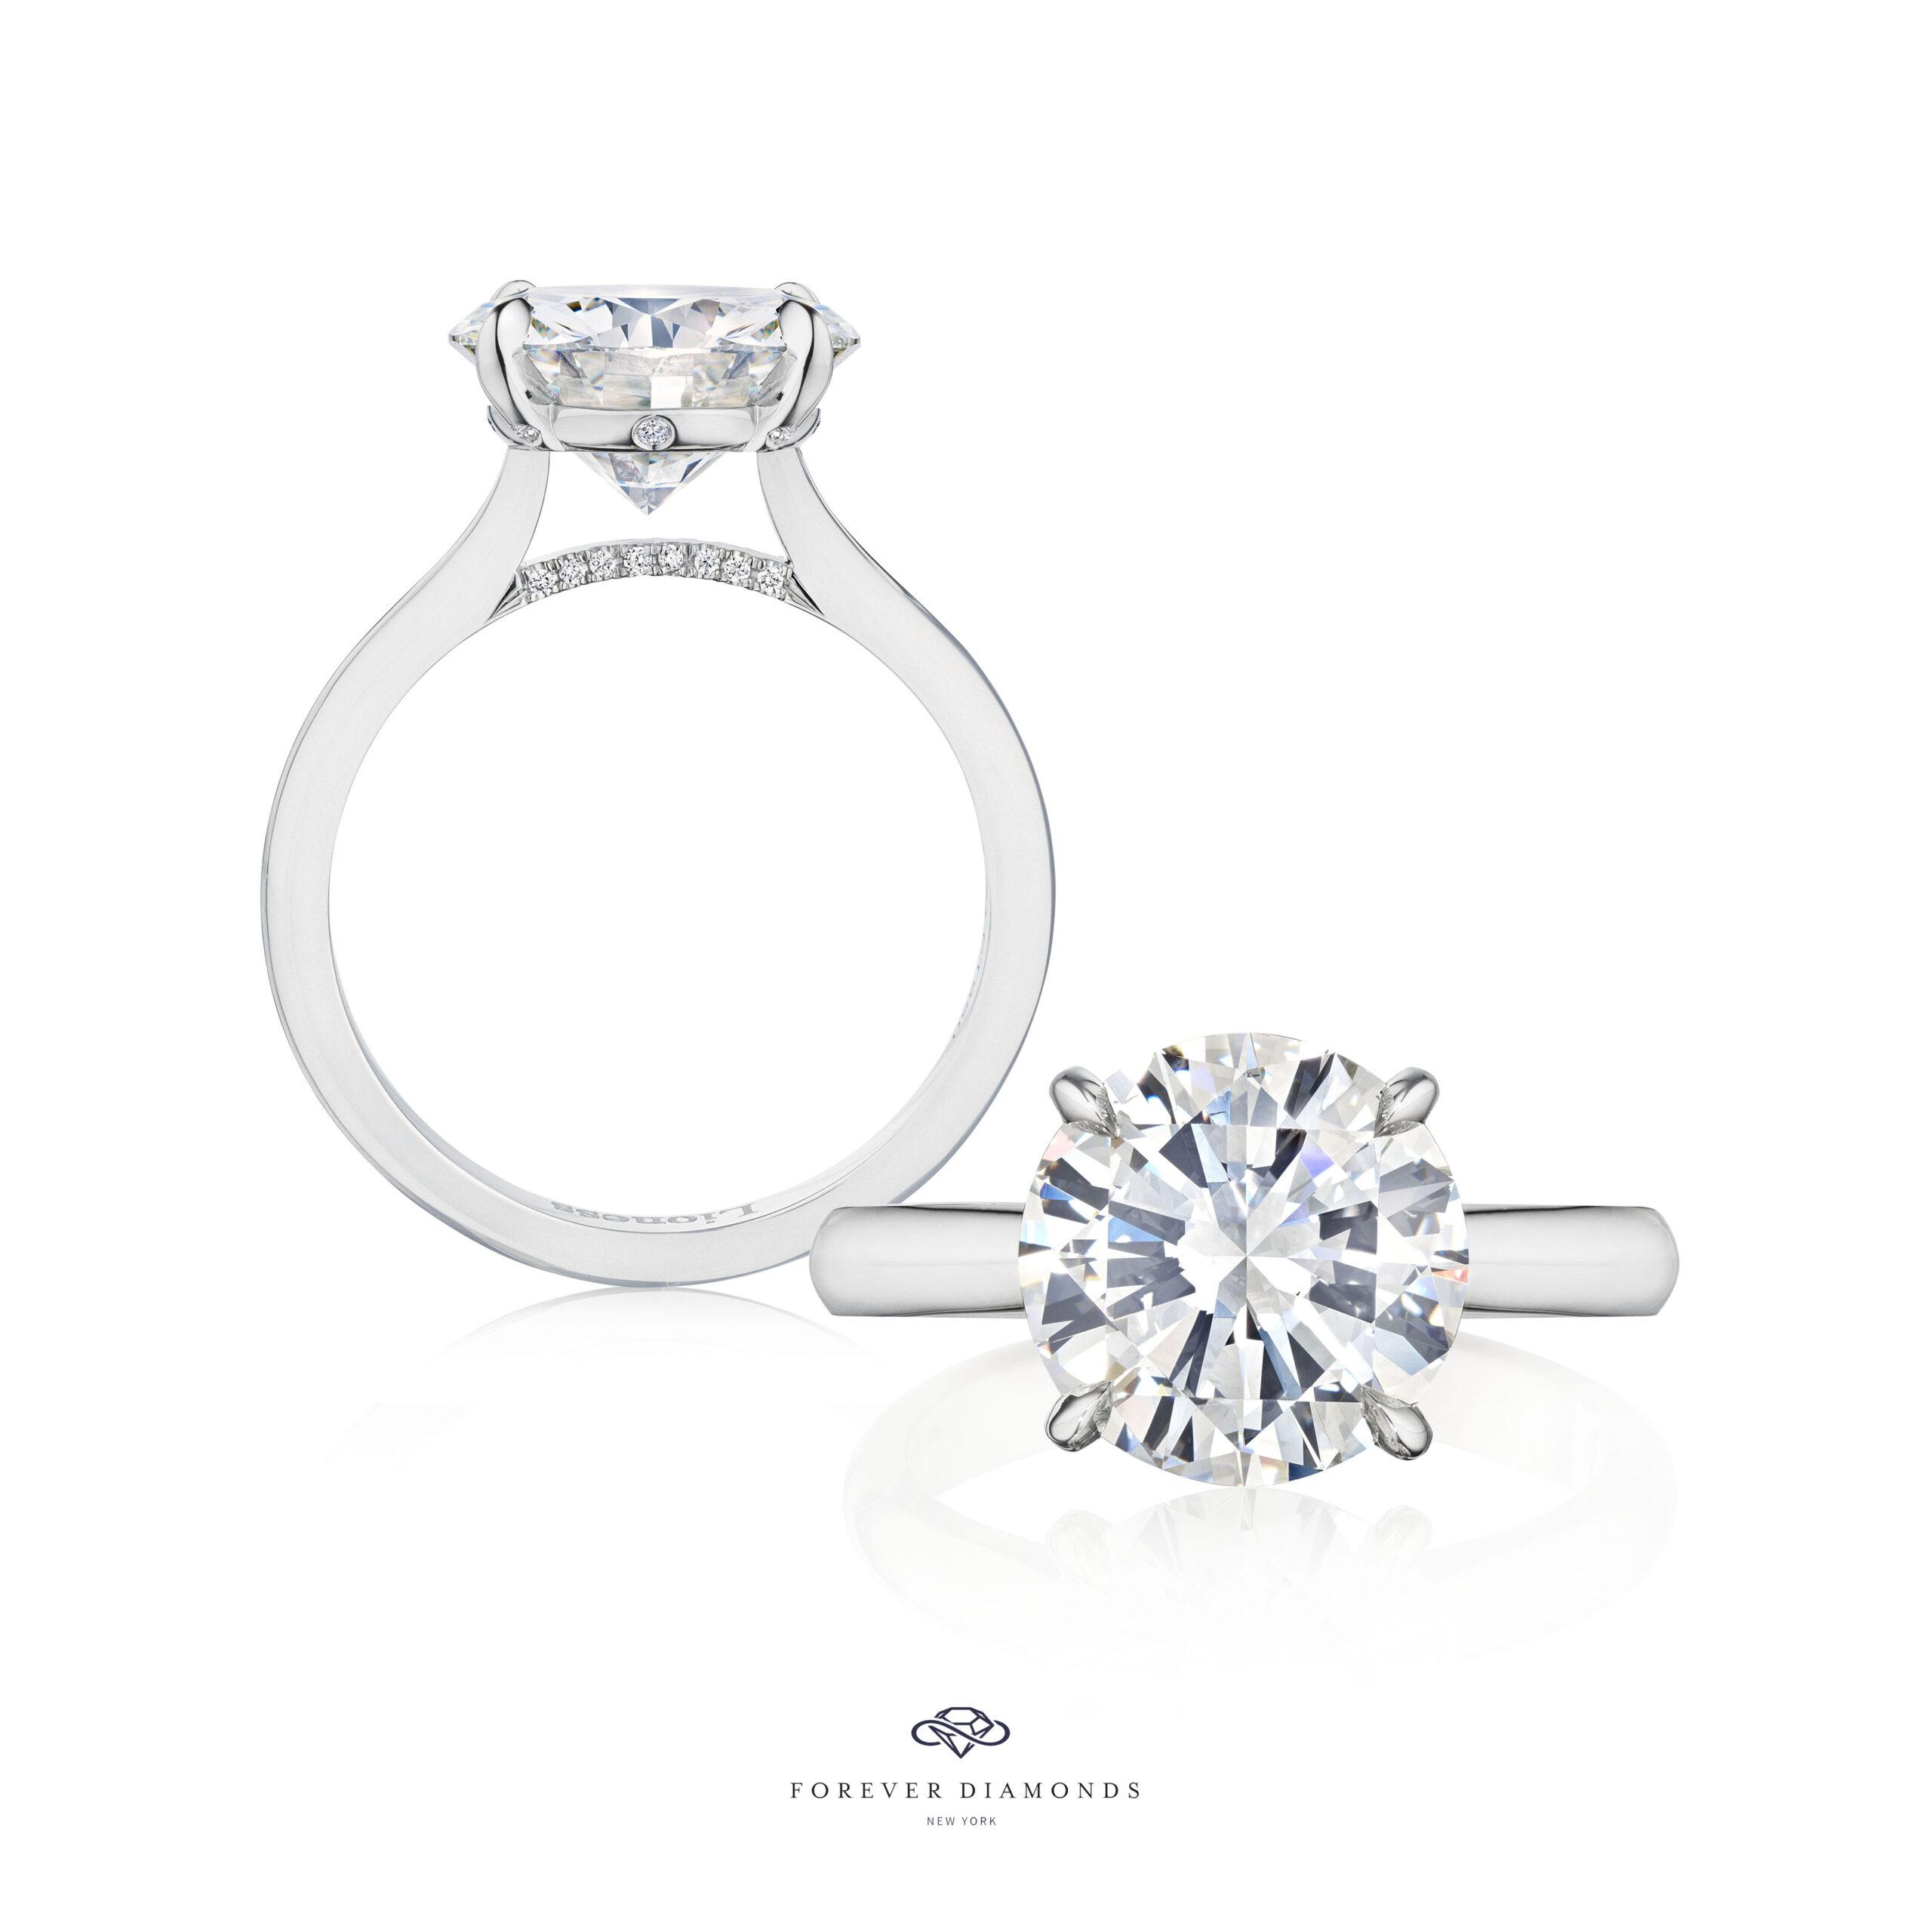 Britney Spears stunning 4 carat diamond engagement ring from Sam Asghari